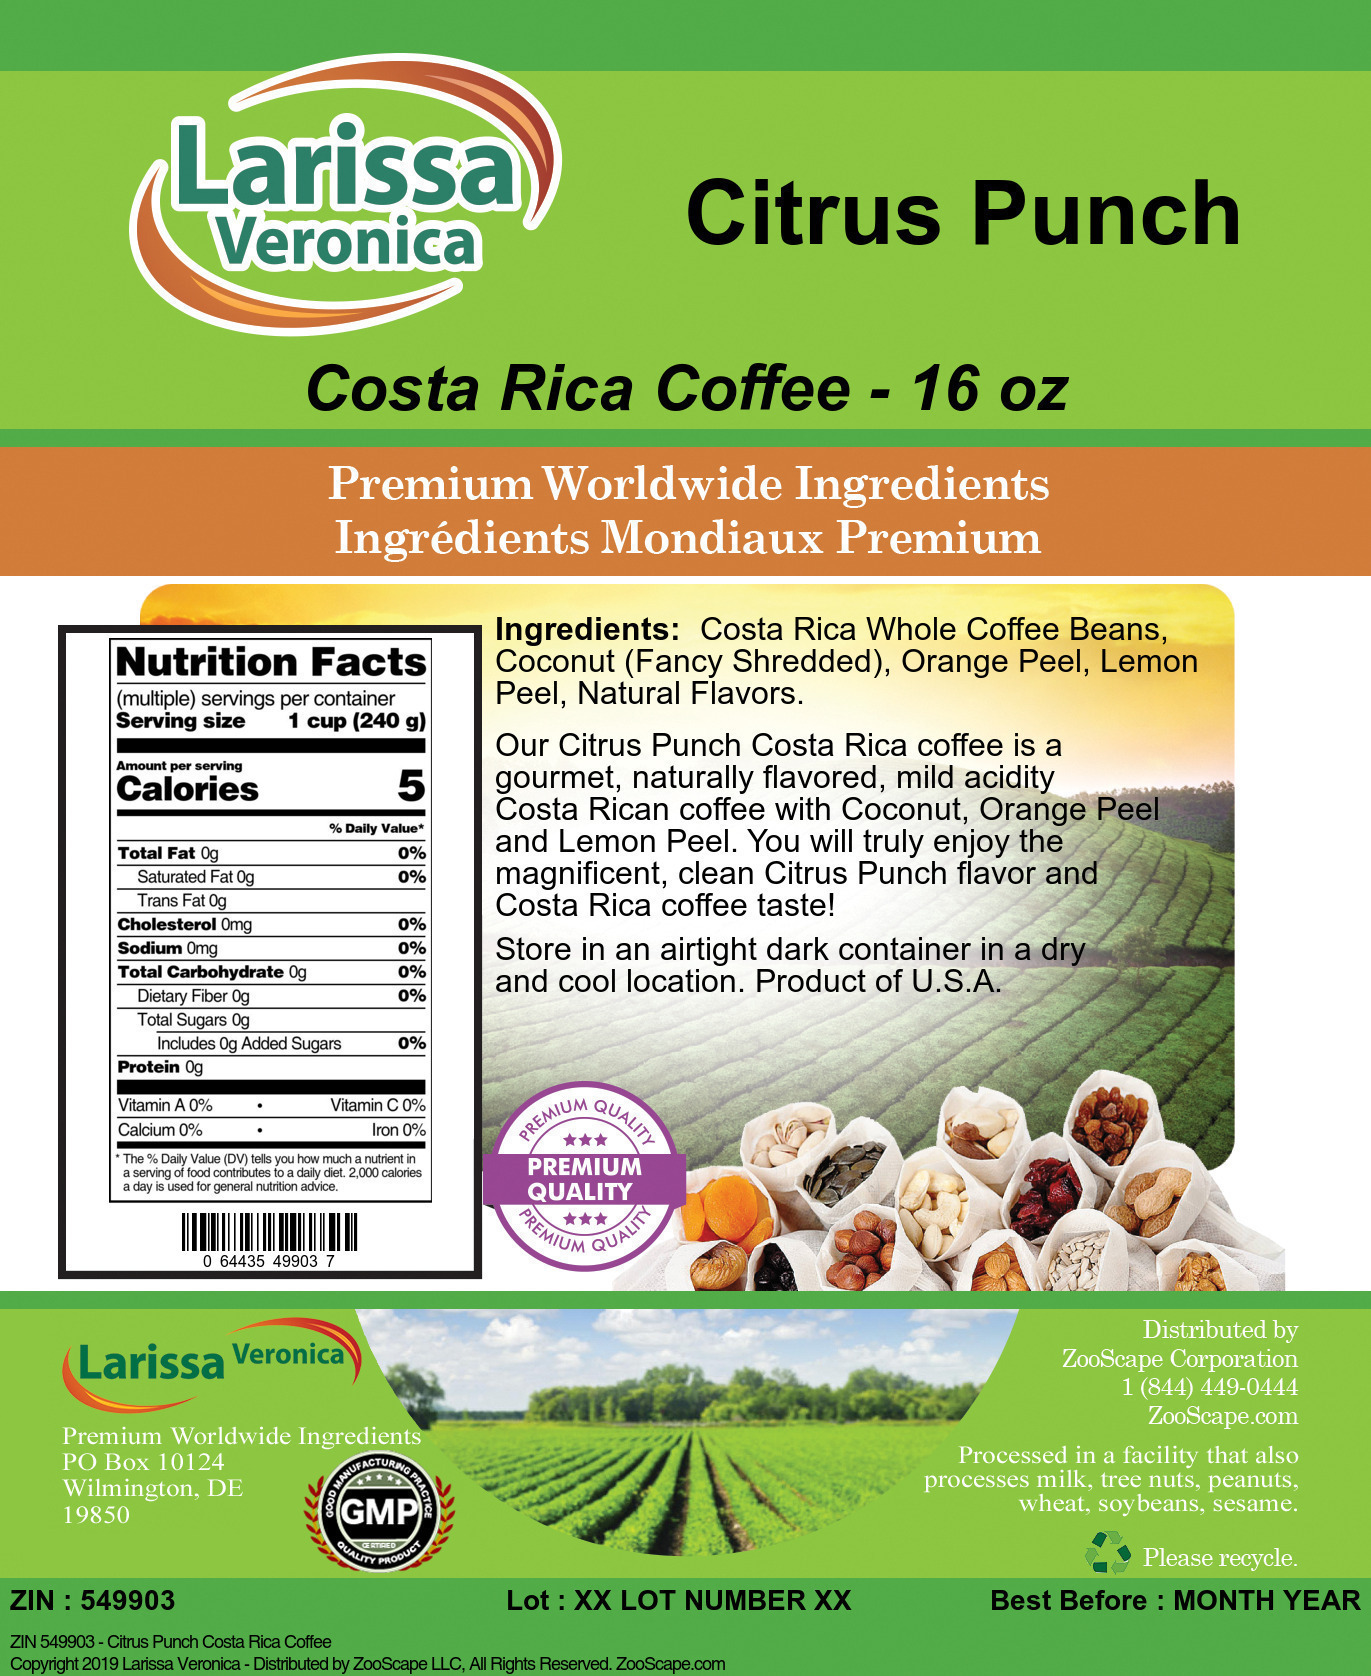 Citrus Punch Costa Rica Coffee - Label